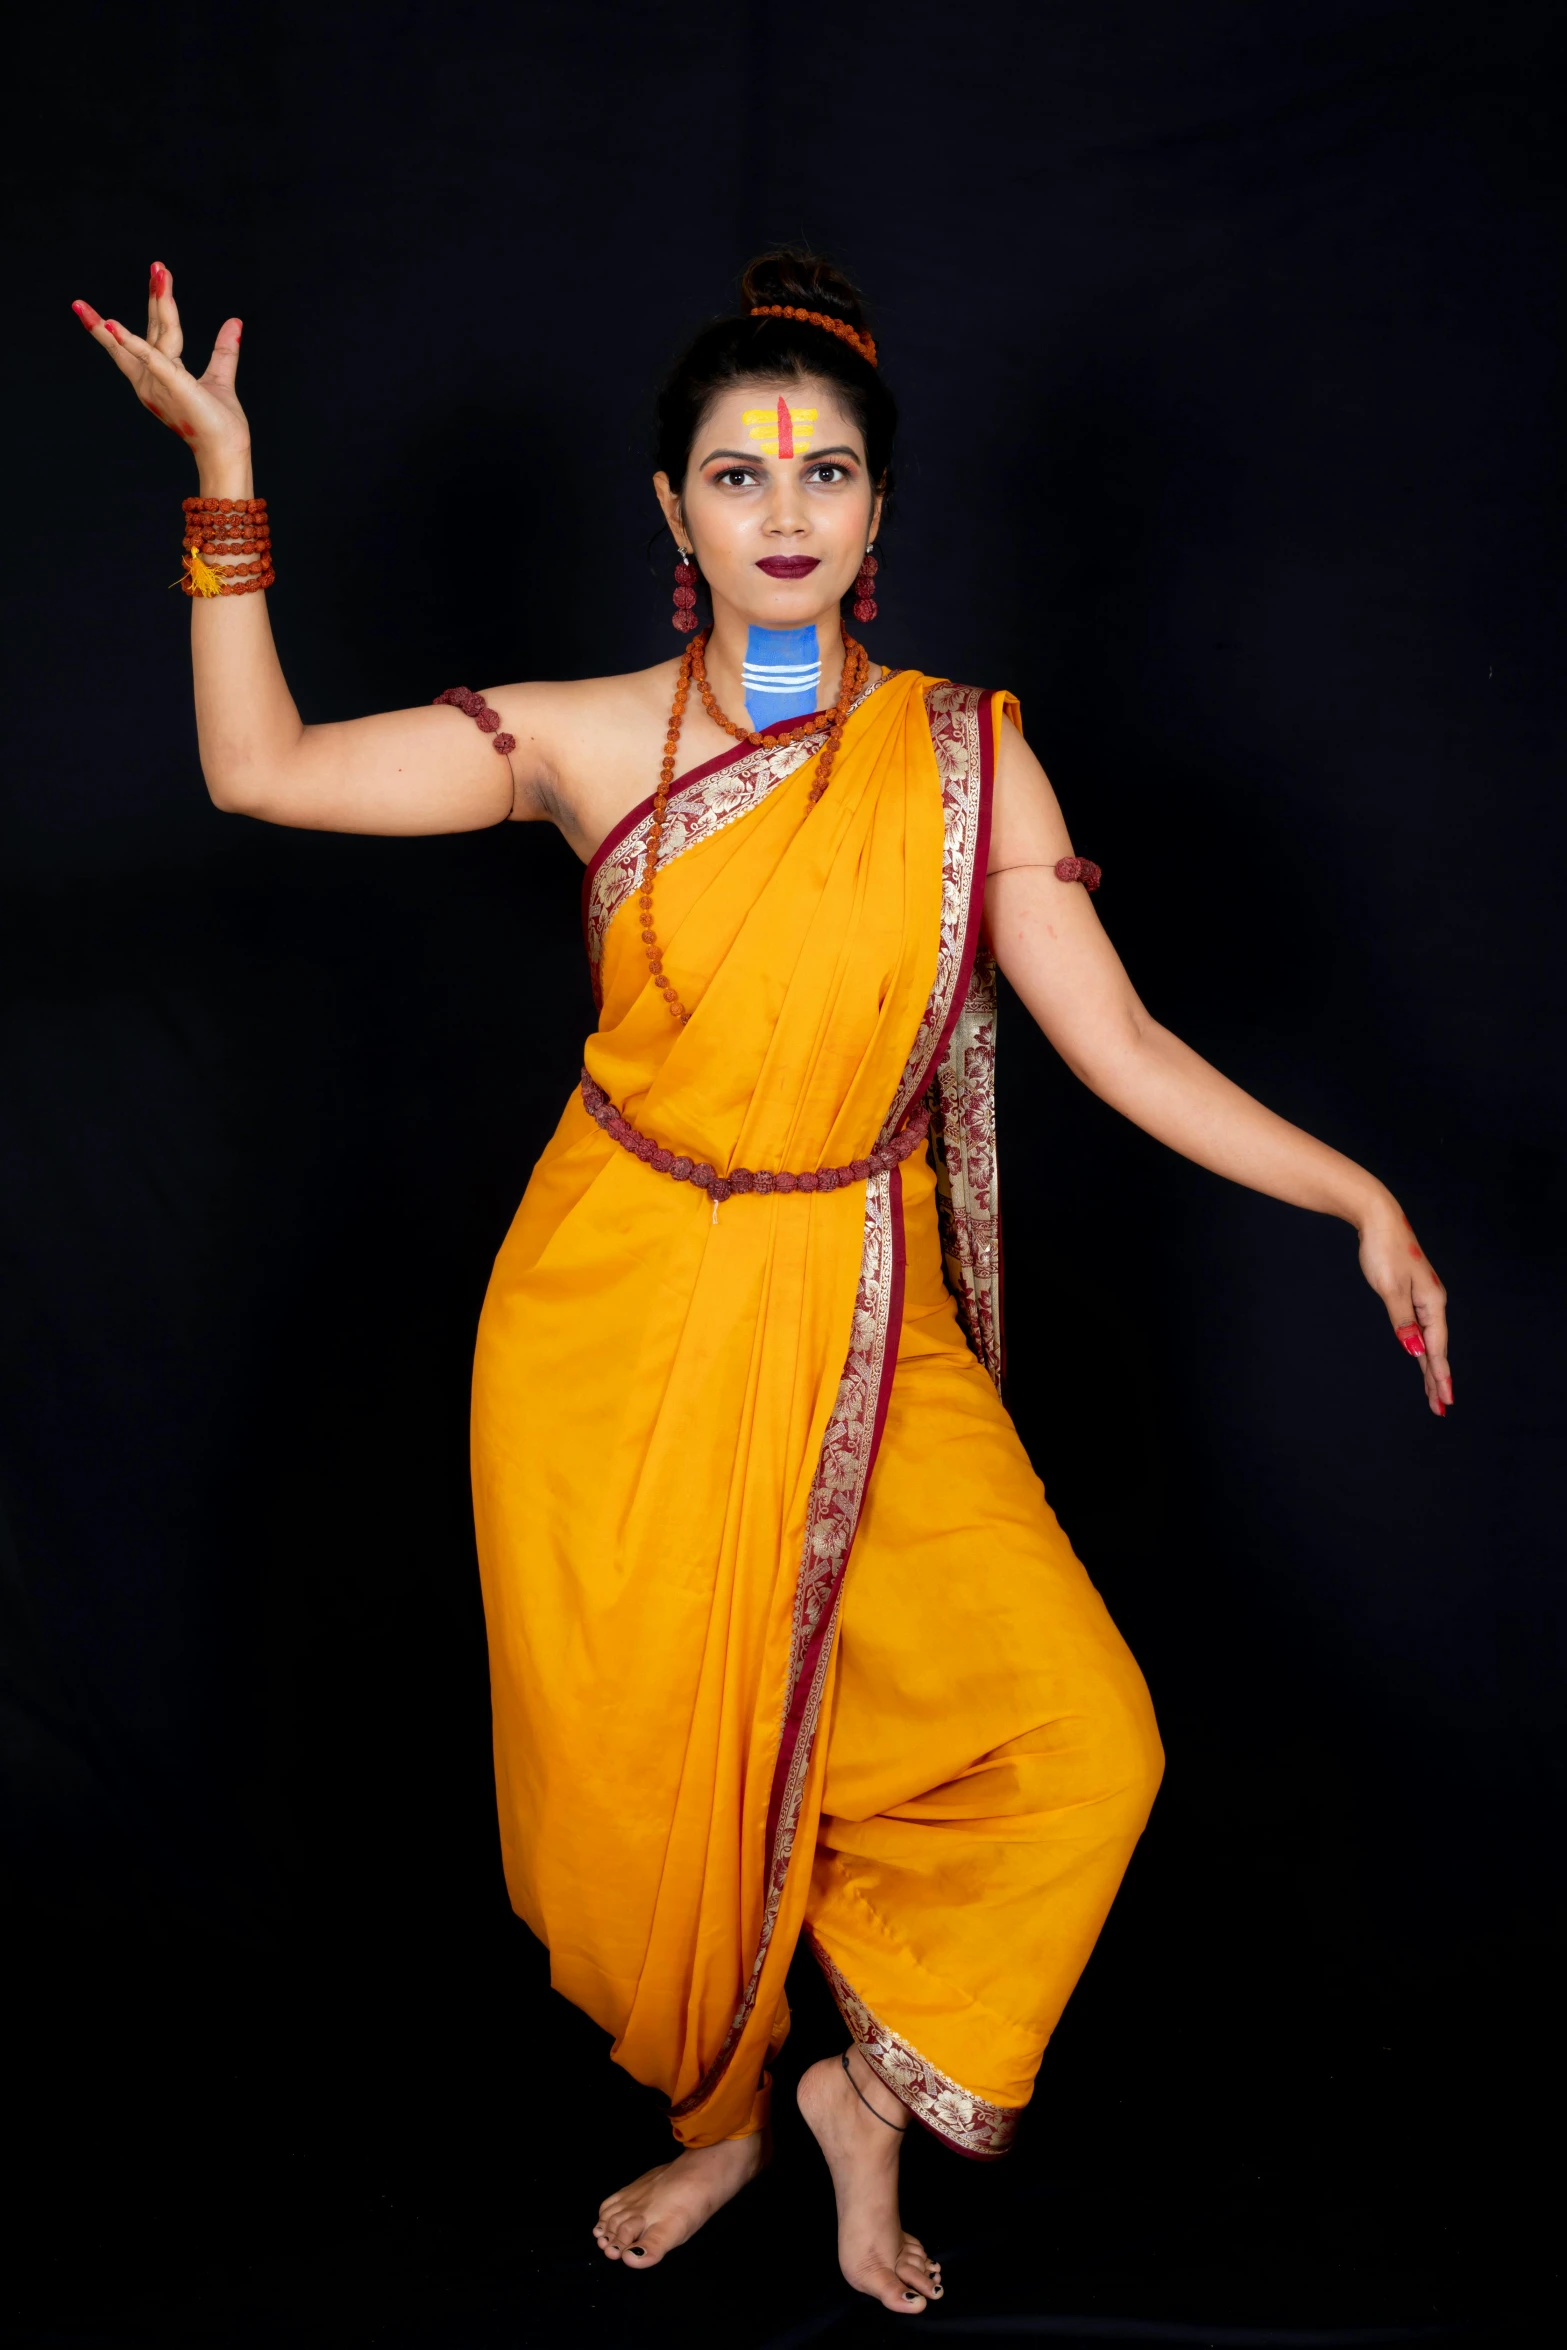 a woman in an orange sari is wearing a microphone